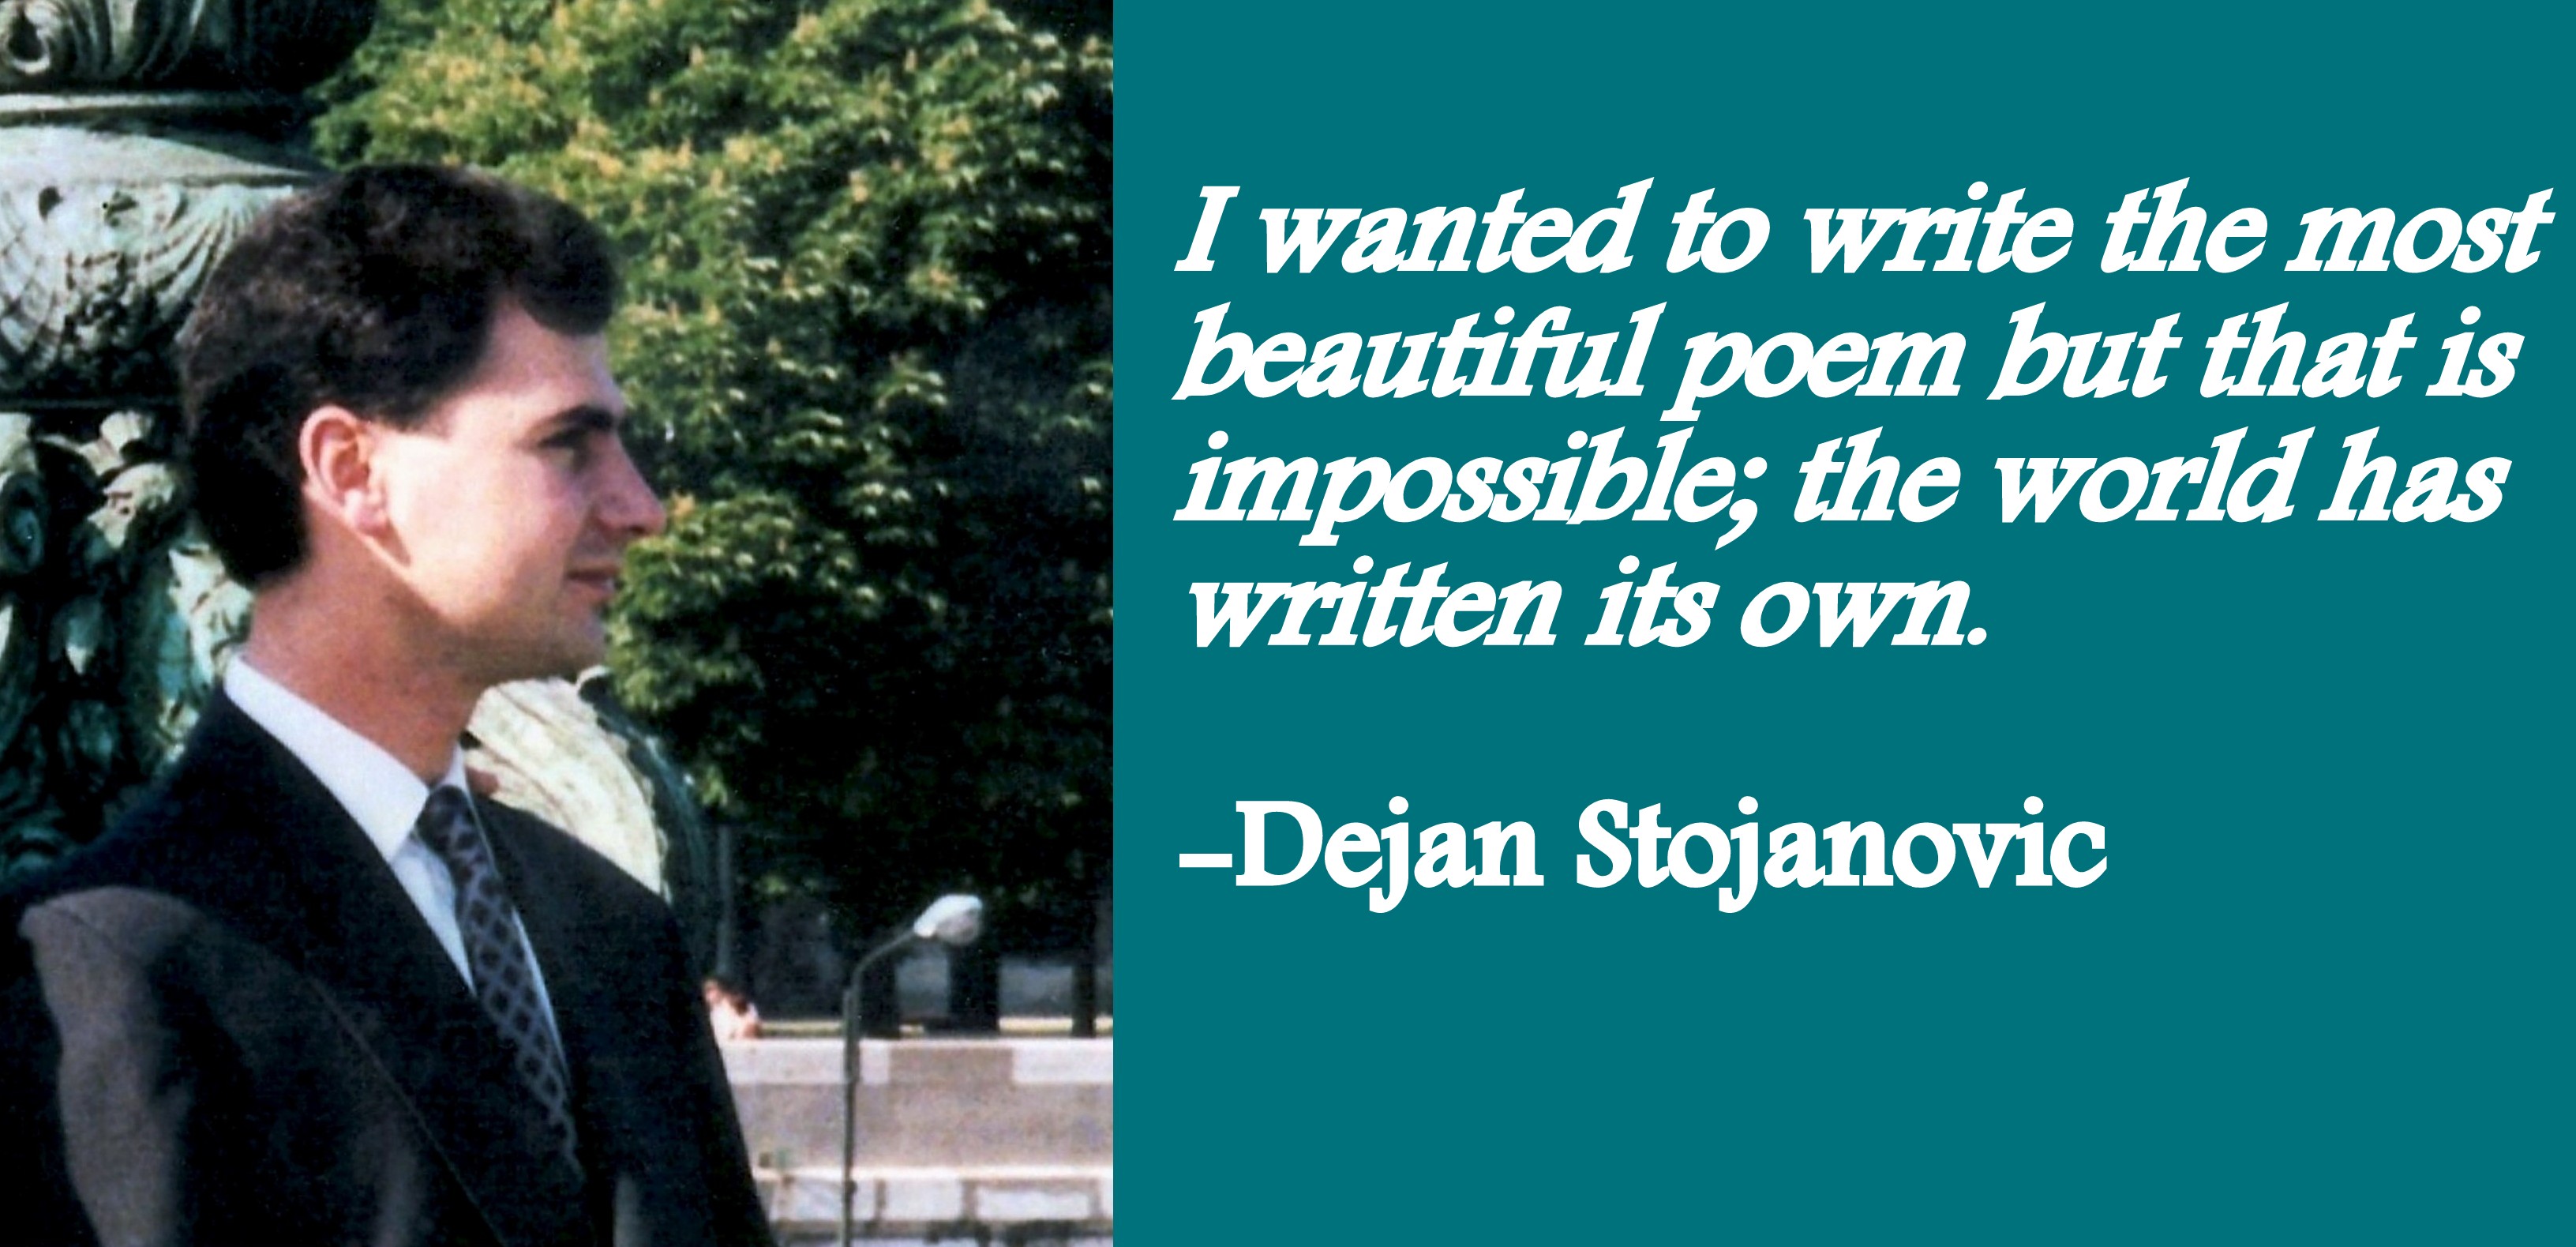 The Most Beautiful Poem - Dejan Stojanovic